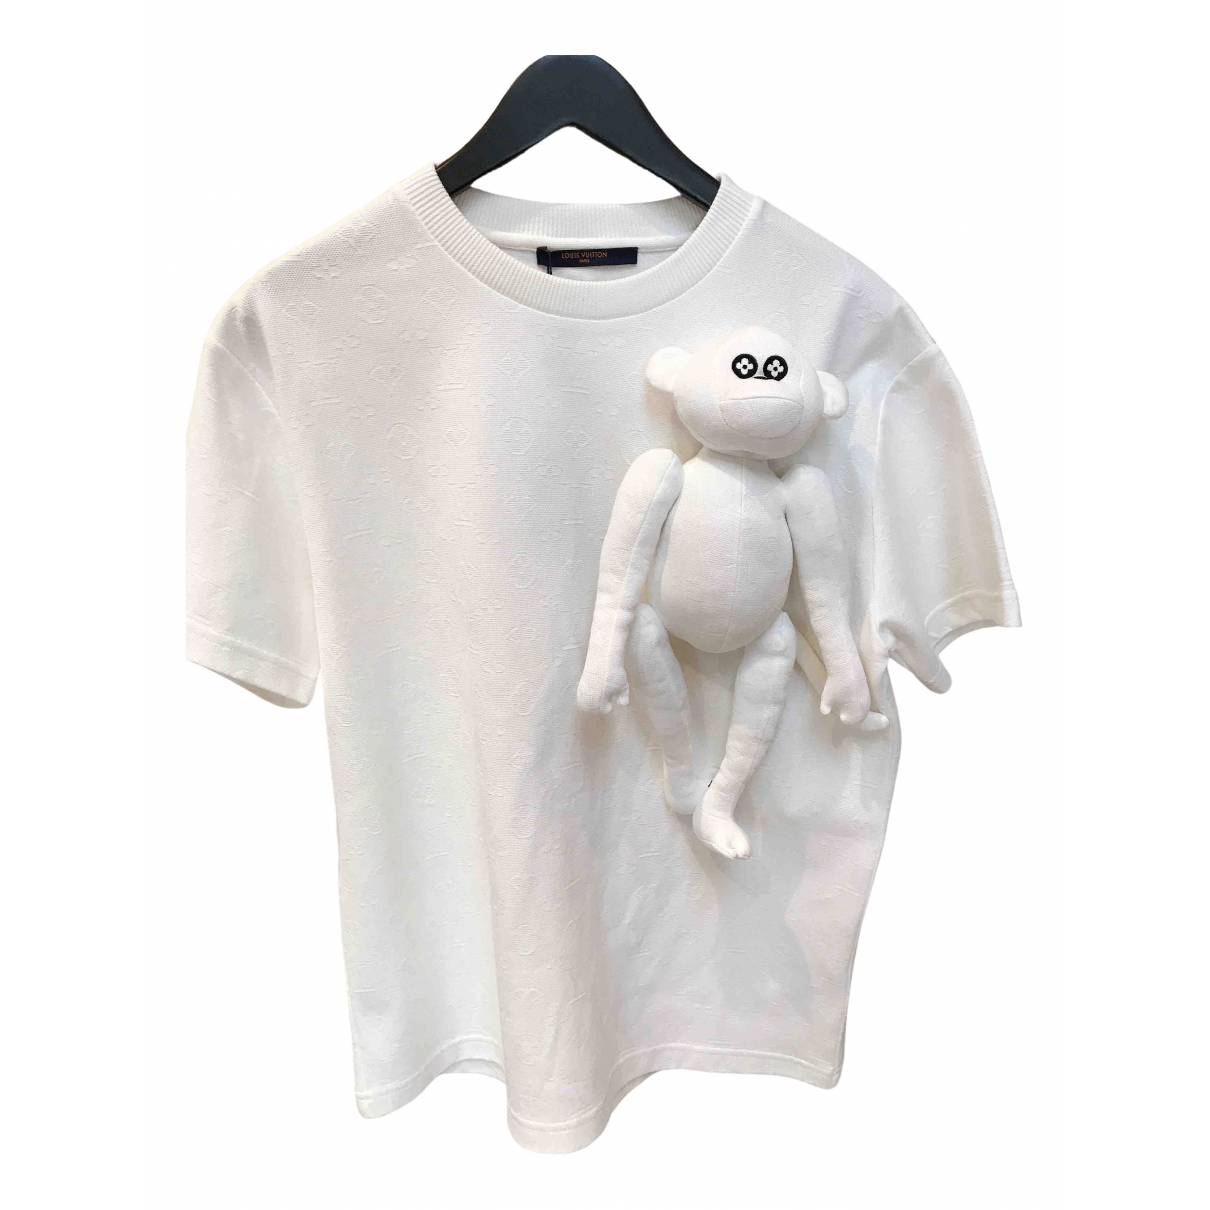 T-shirt Louis Vuitton White size M International in Cotton - 14770165